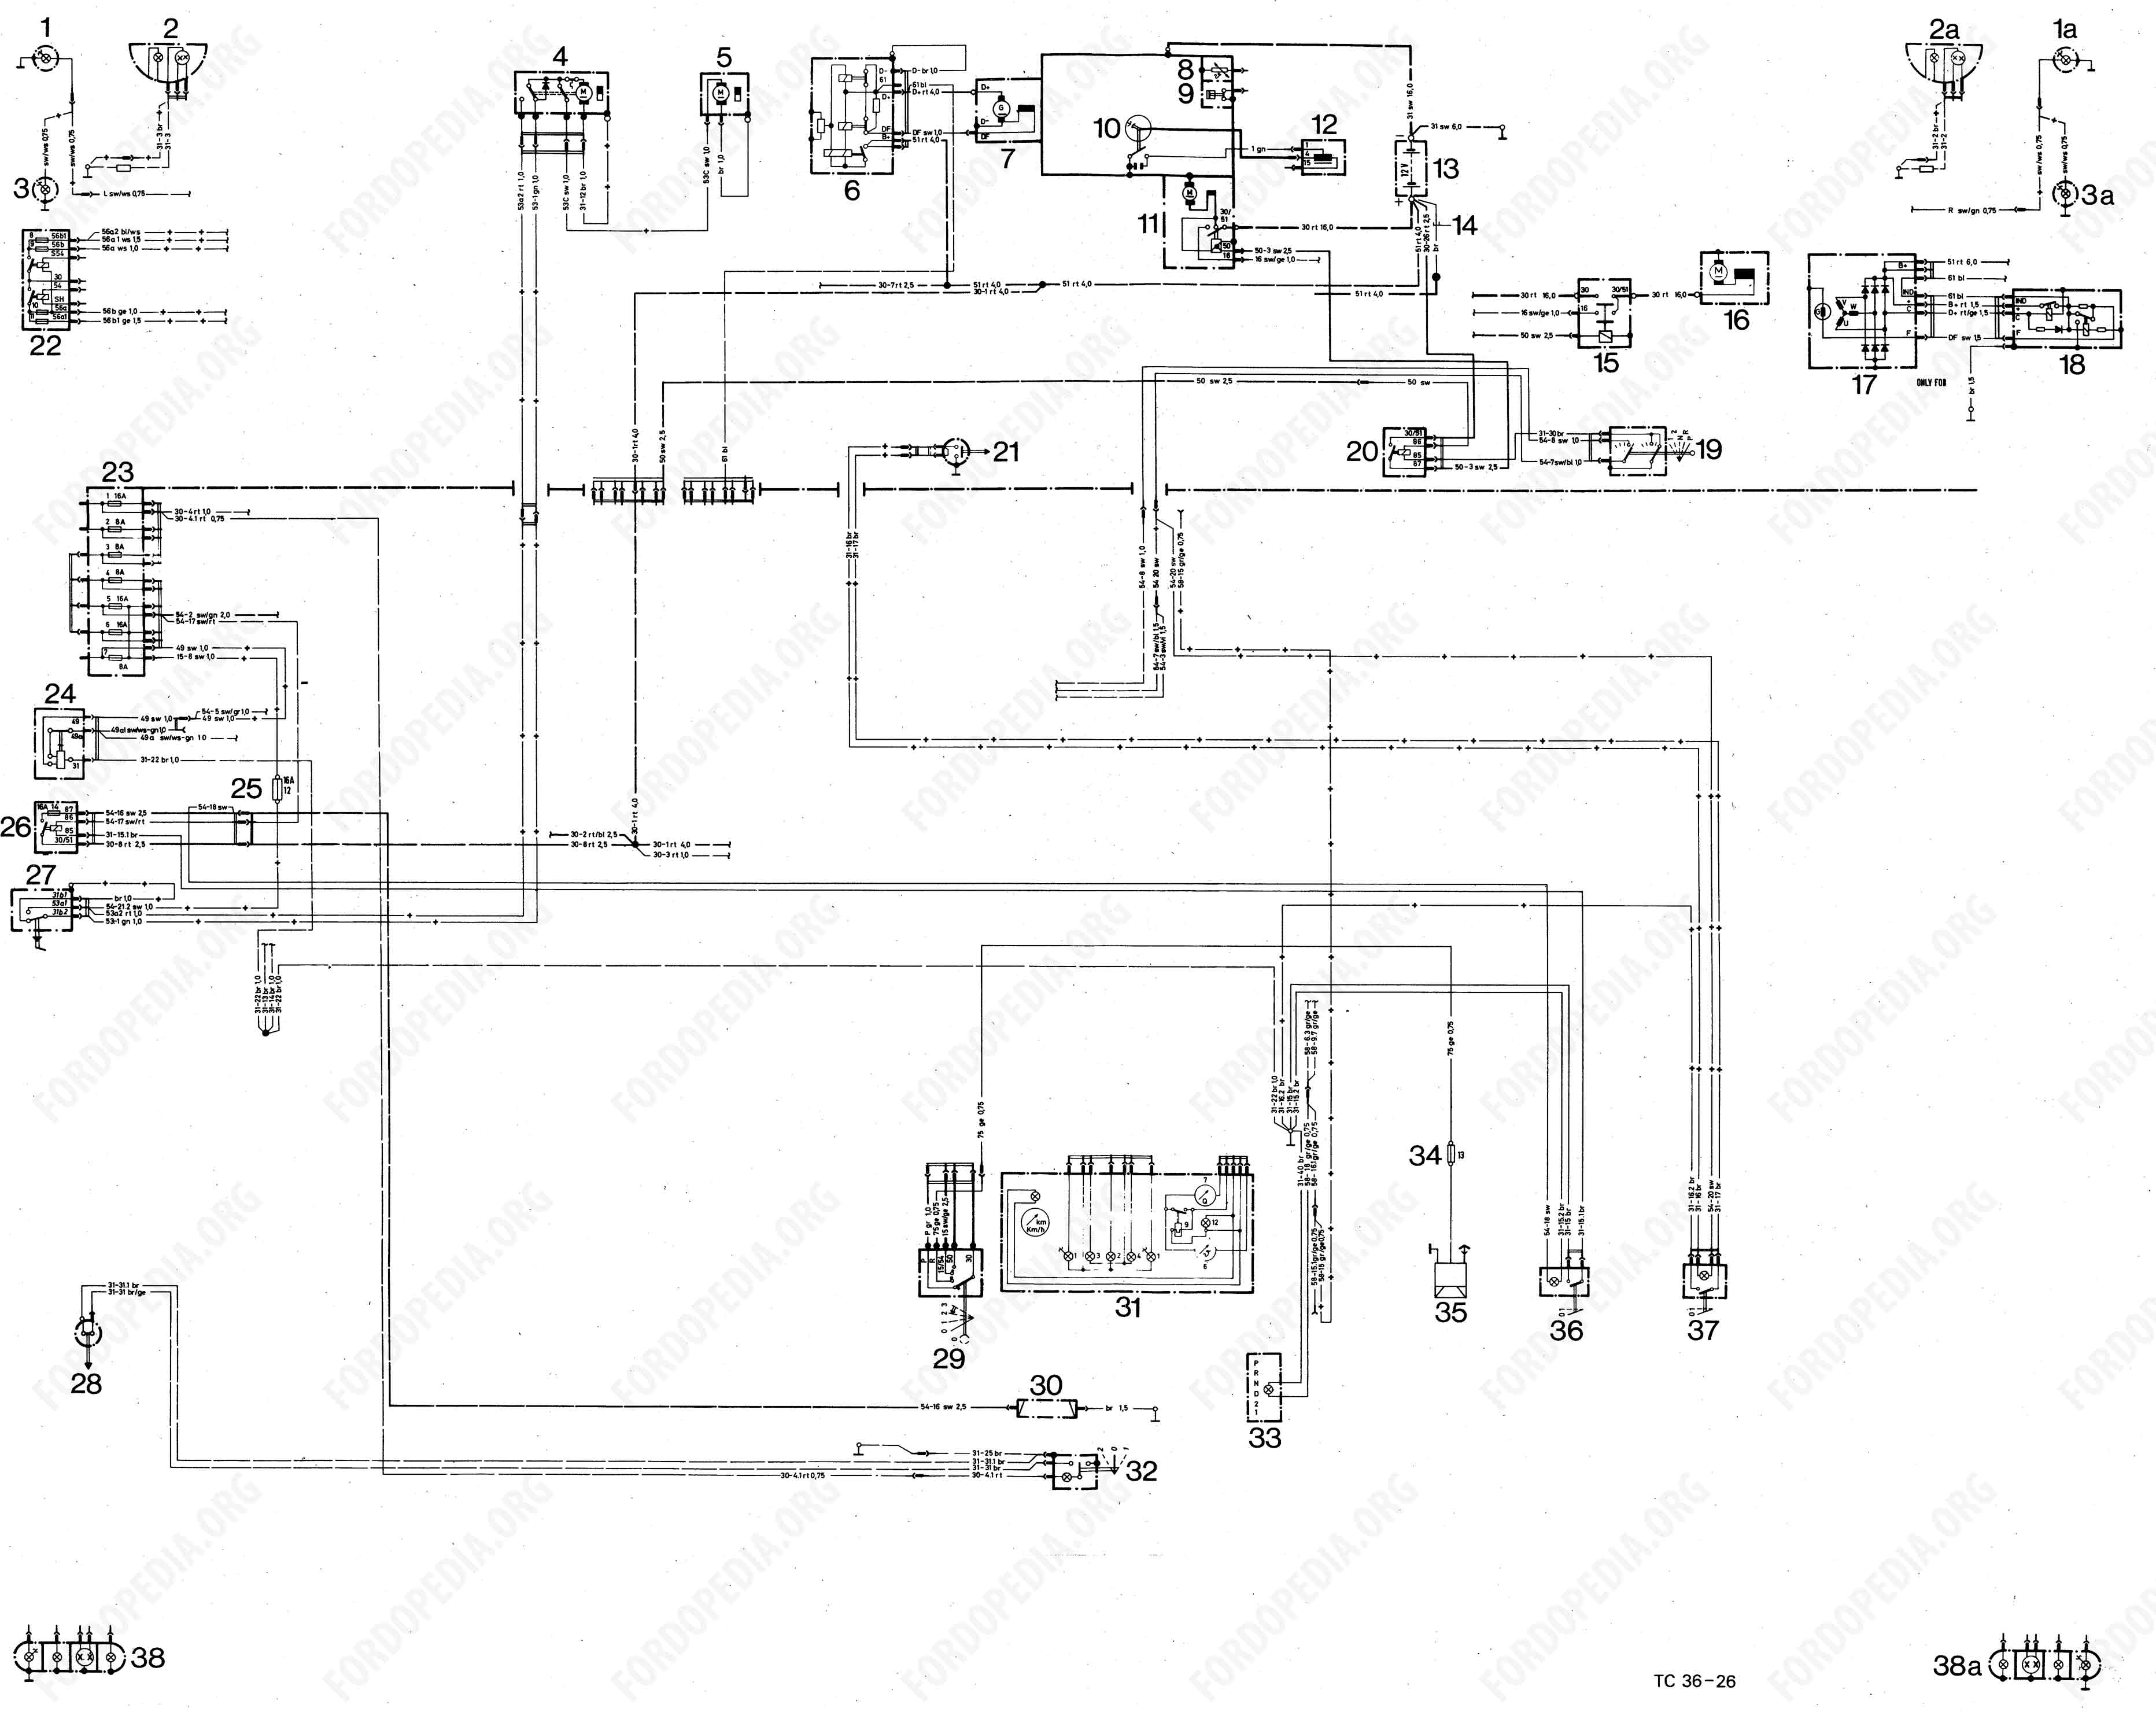 Ford cortina wiper motor wiring diagram #4